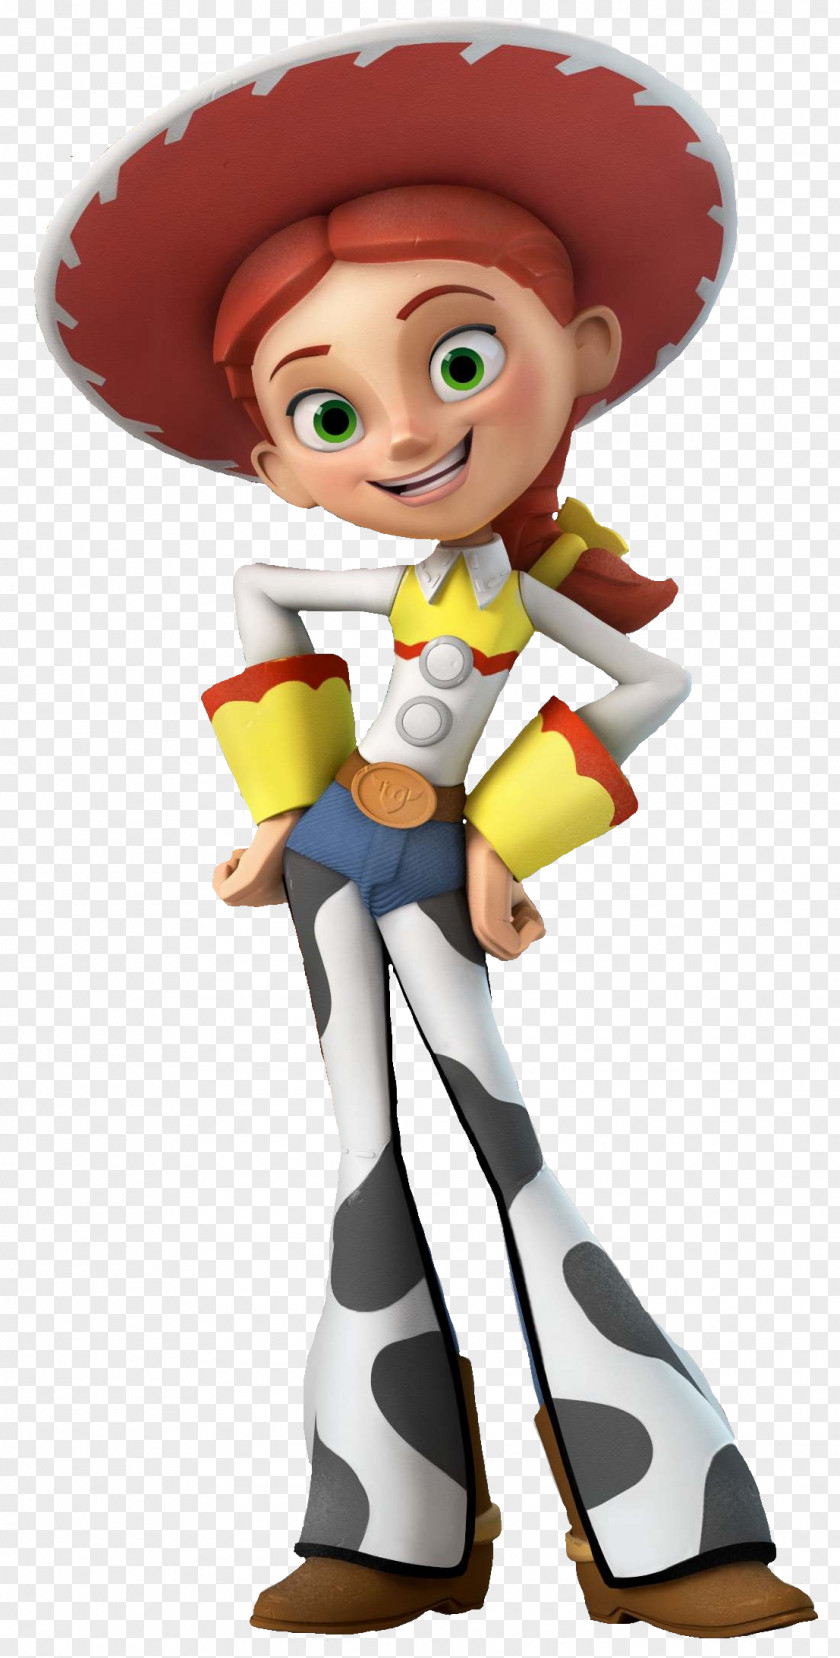 Toy Story Jessie File Disney Infinity Buzz Lightyear Lightning McQueen Sheriff Woody PNG